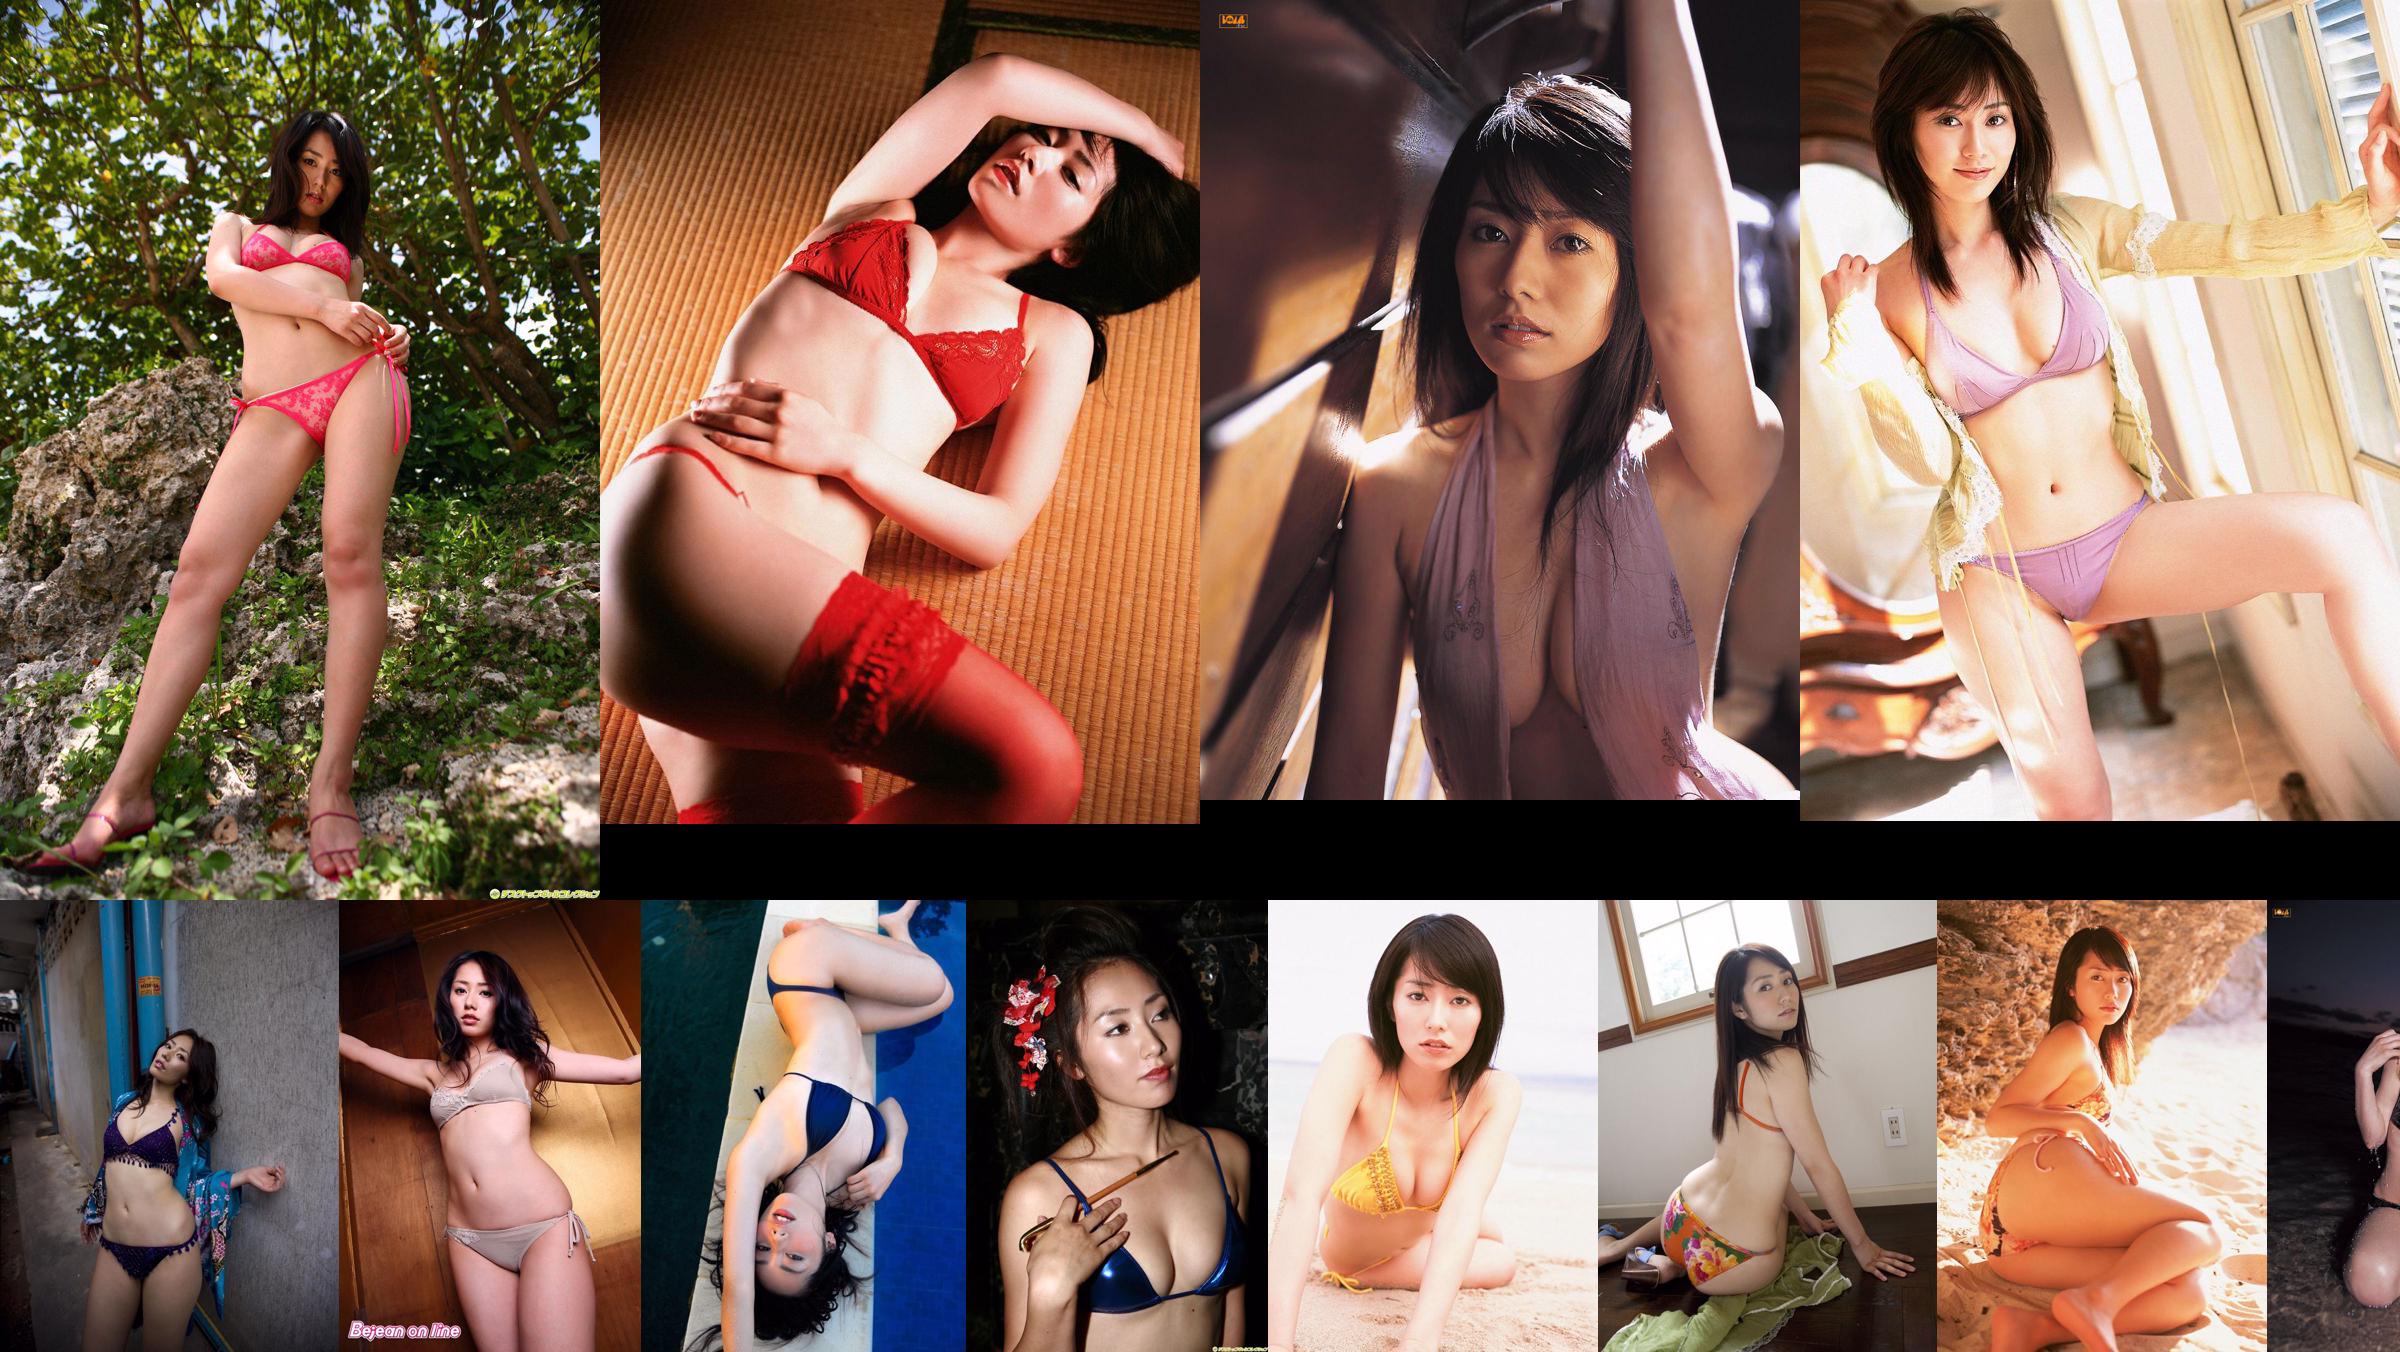 Tani Momoko / Shige Mori Tomi / Ito Emi / Nakagawa Anna / Toda Yui "Random Ladies" [Bomb.TV] October 2009 No.15bf3b Page 1